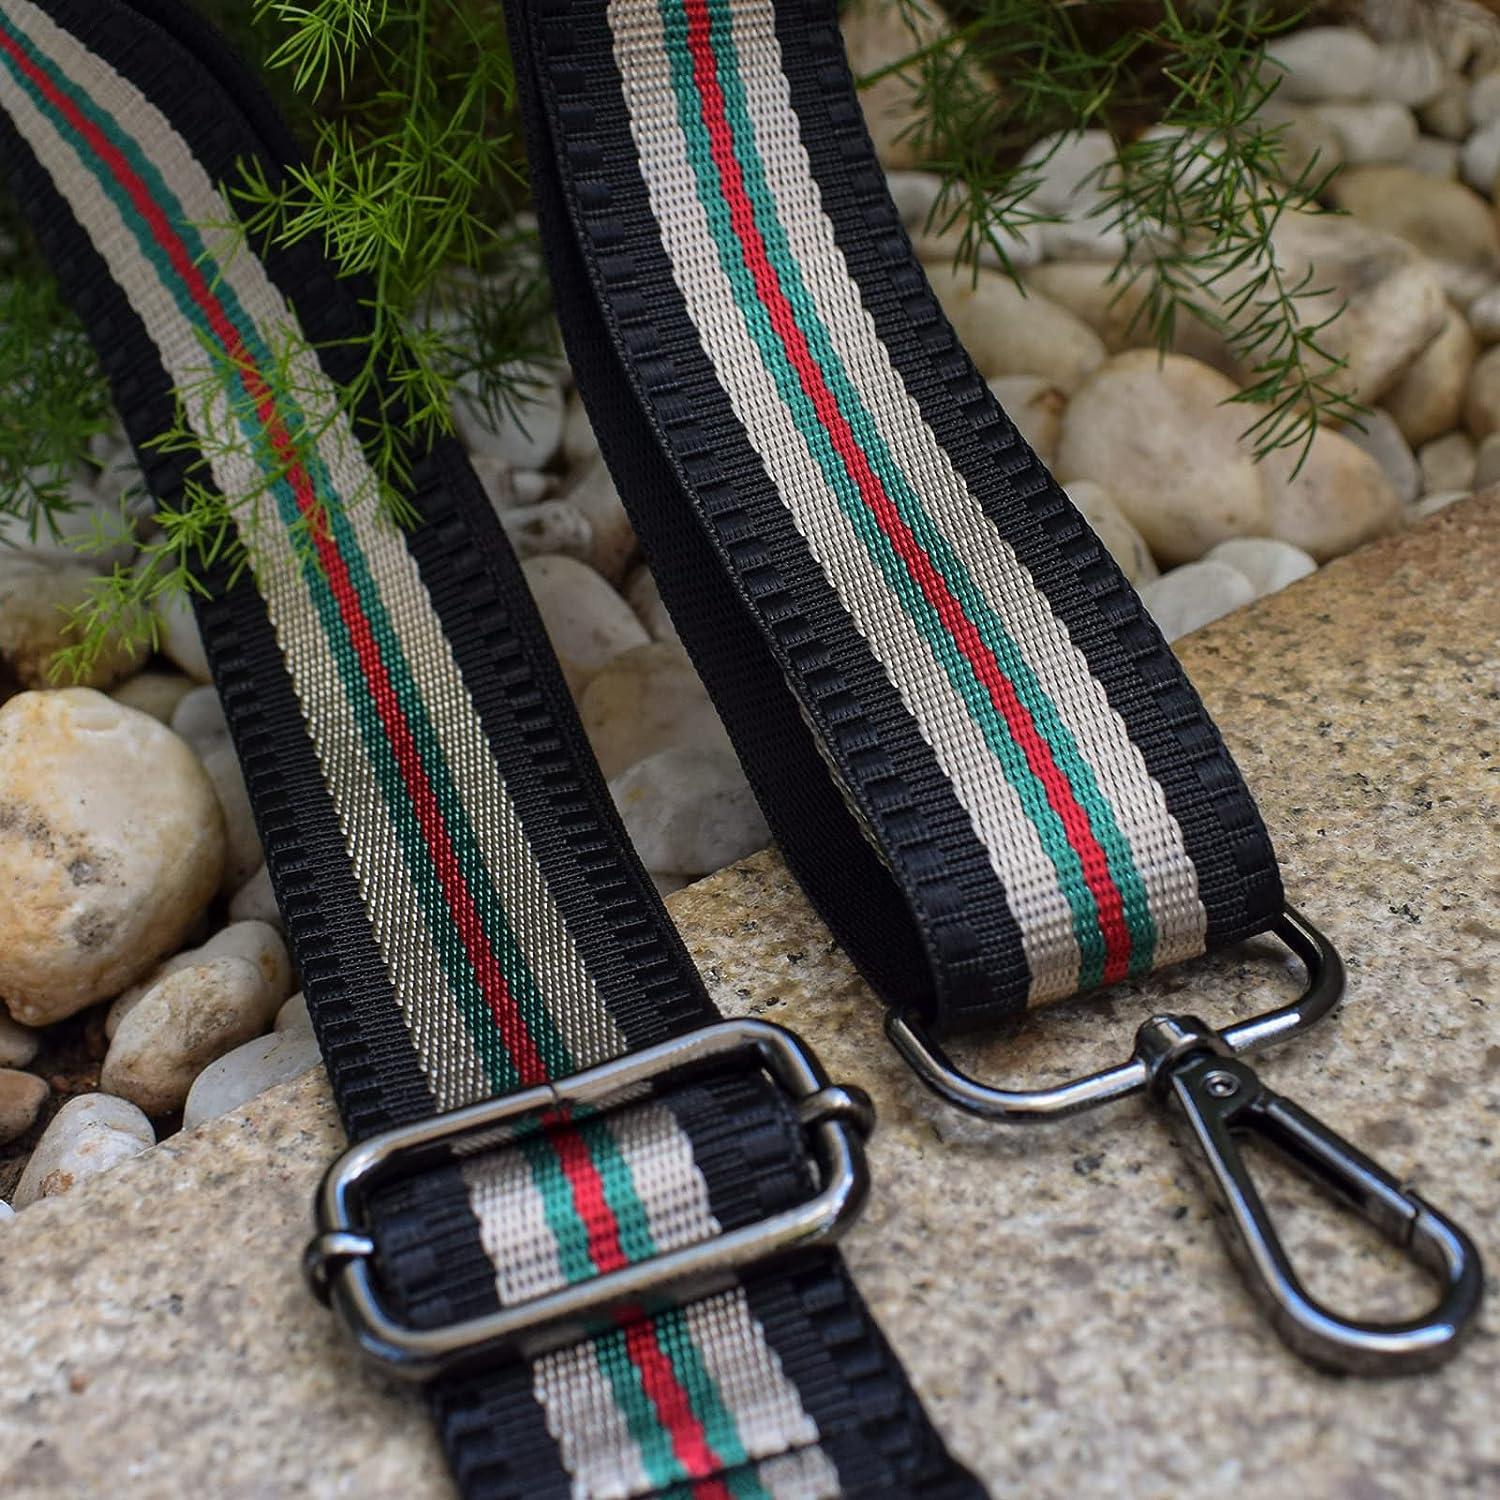 Leather Purse Handbag Shoulder Strap Replacement Belt with Metal